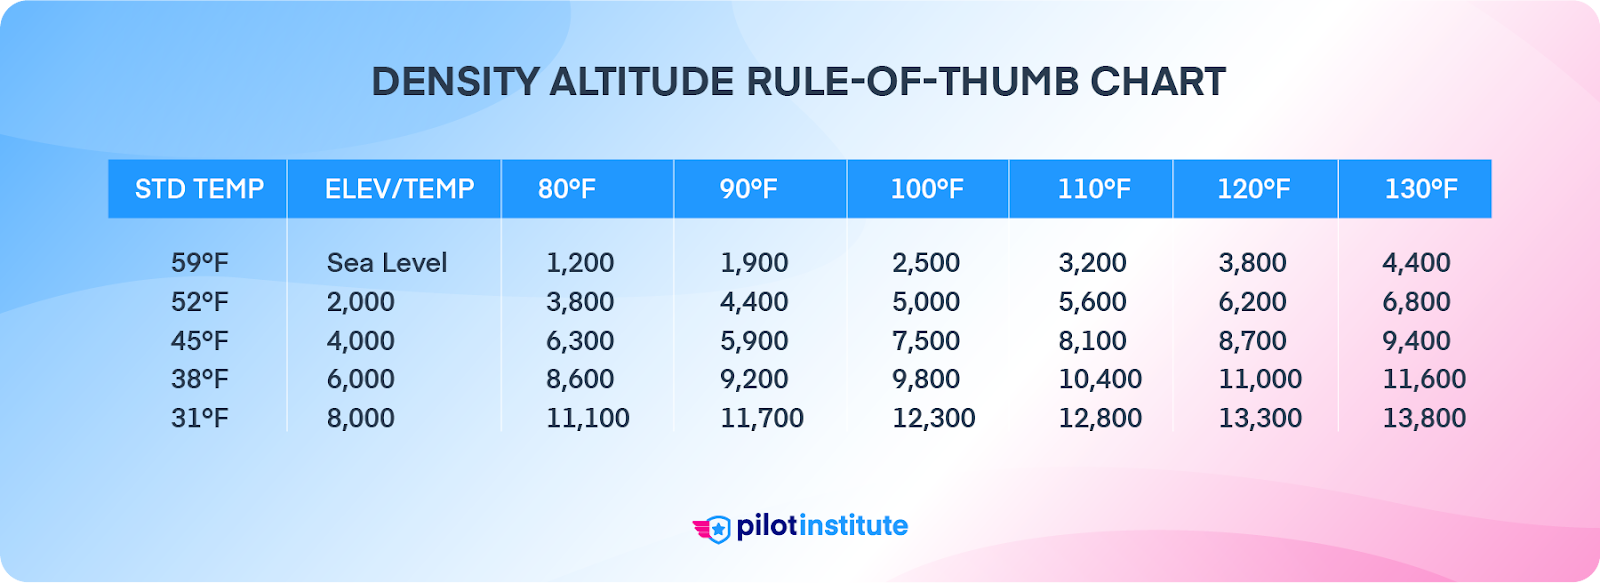 Density altitude rule-of-thumb chart.